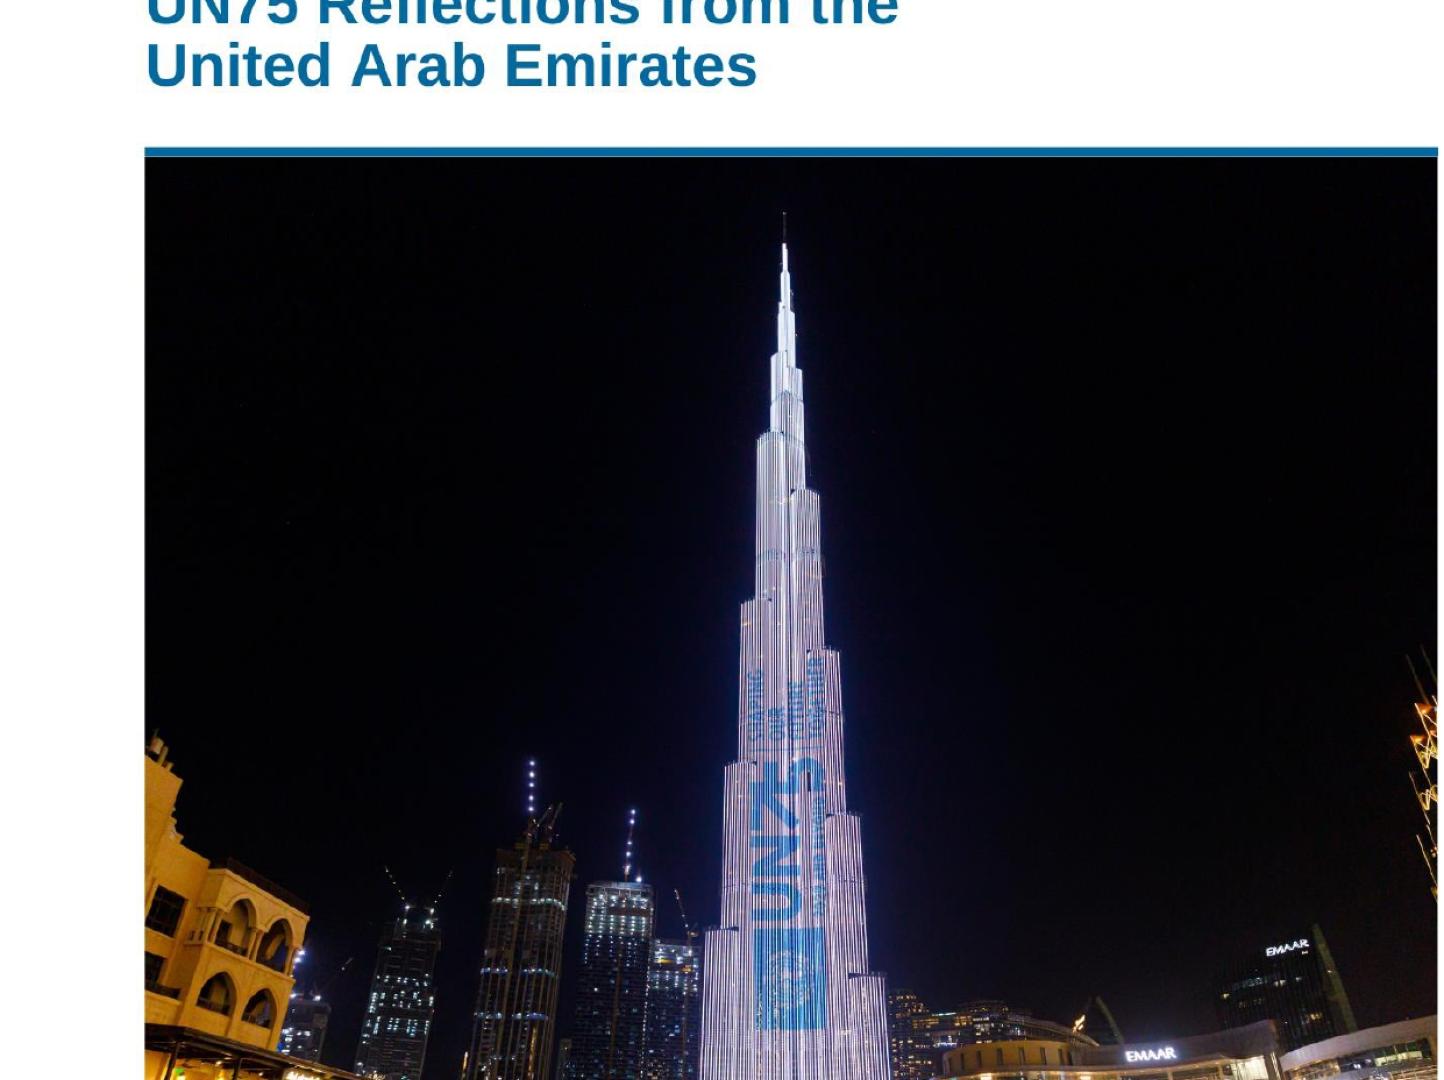 Cover of UAE UN75 Report